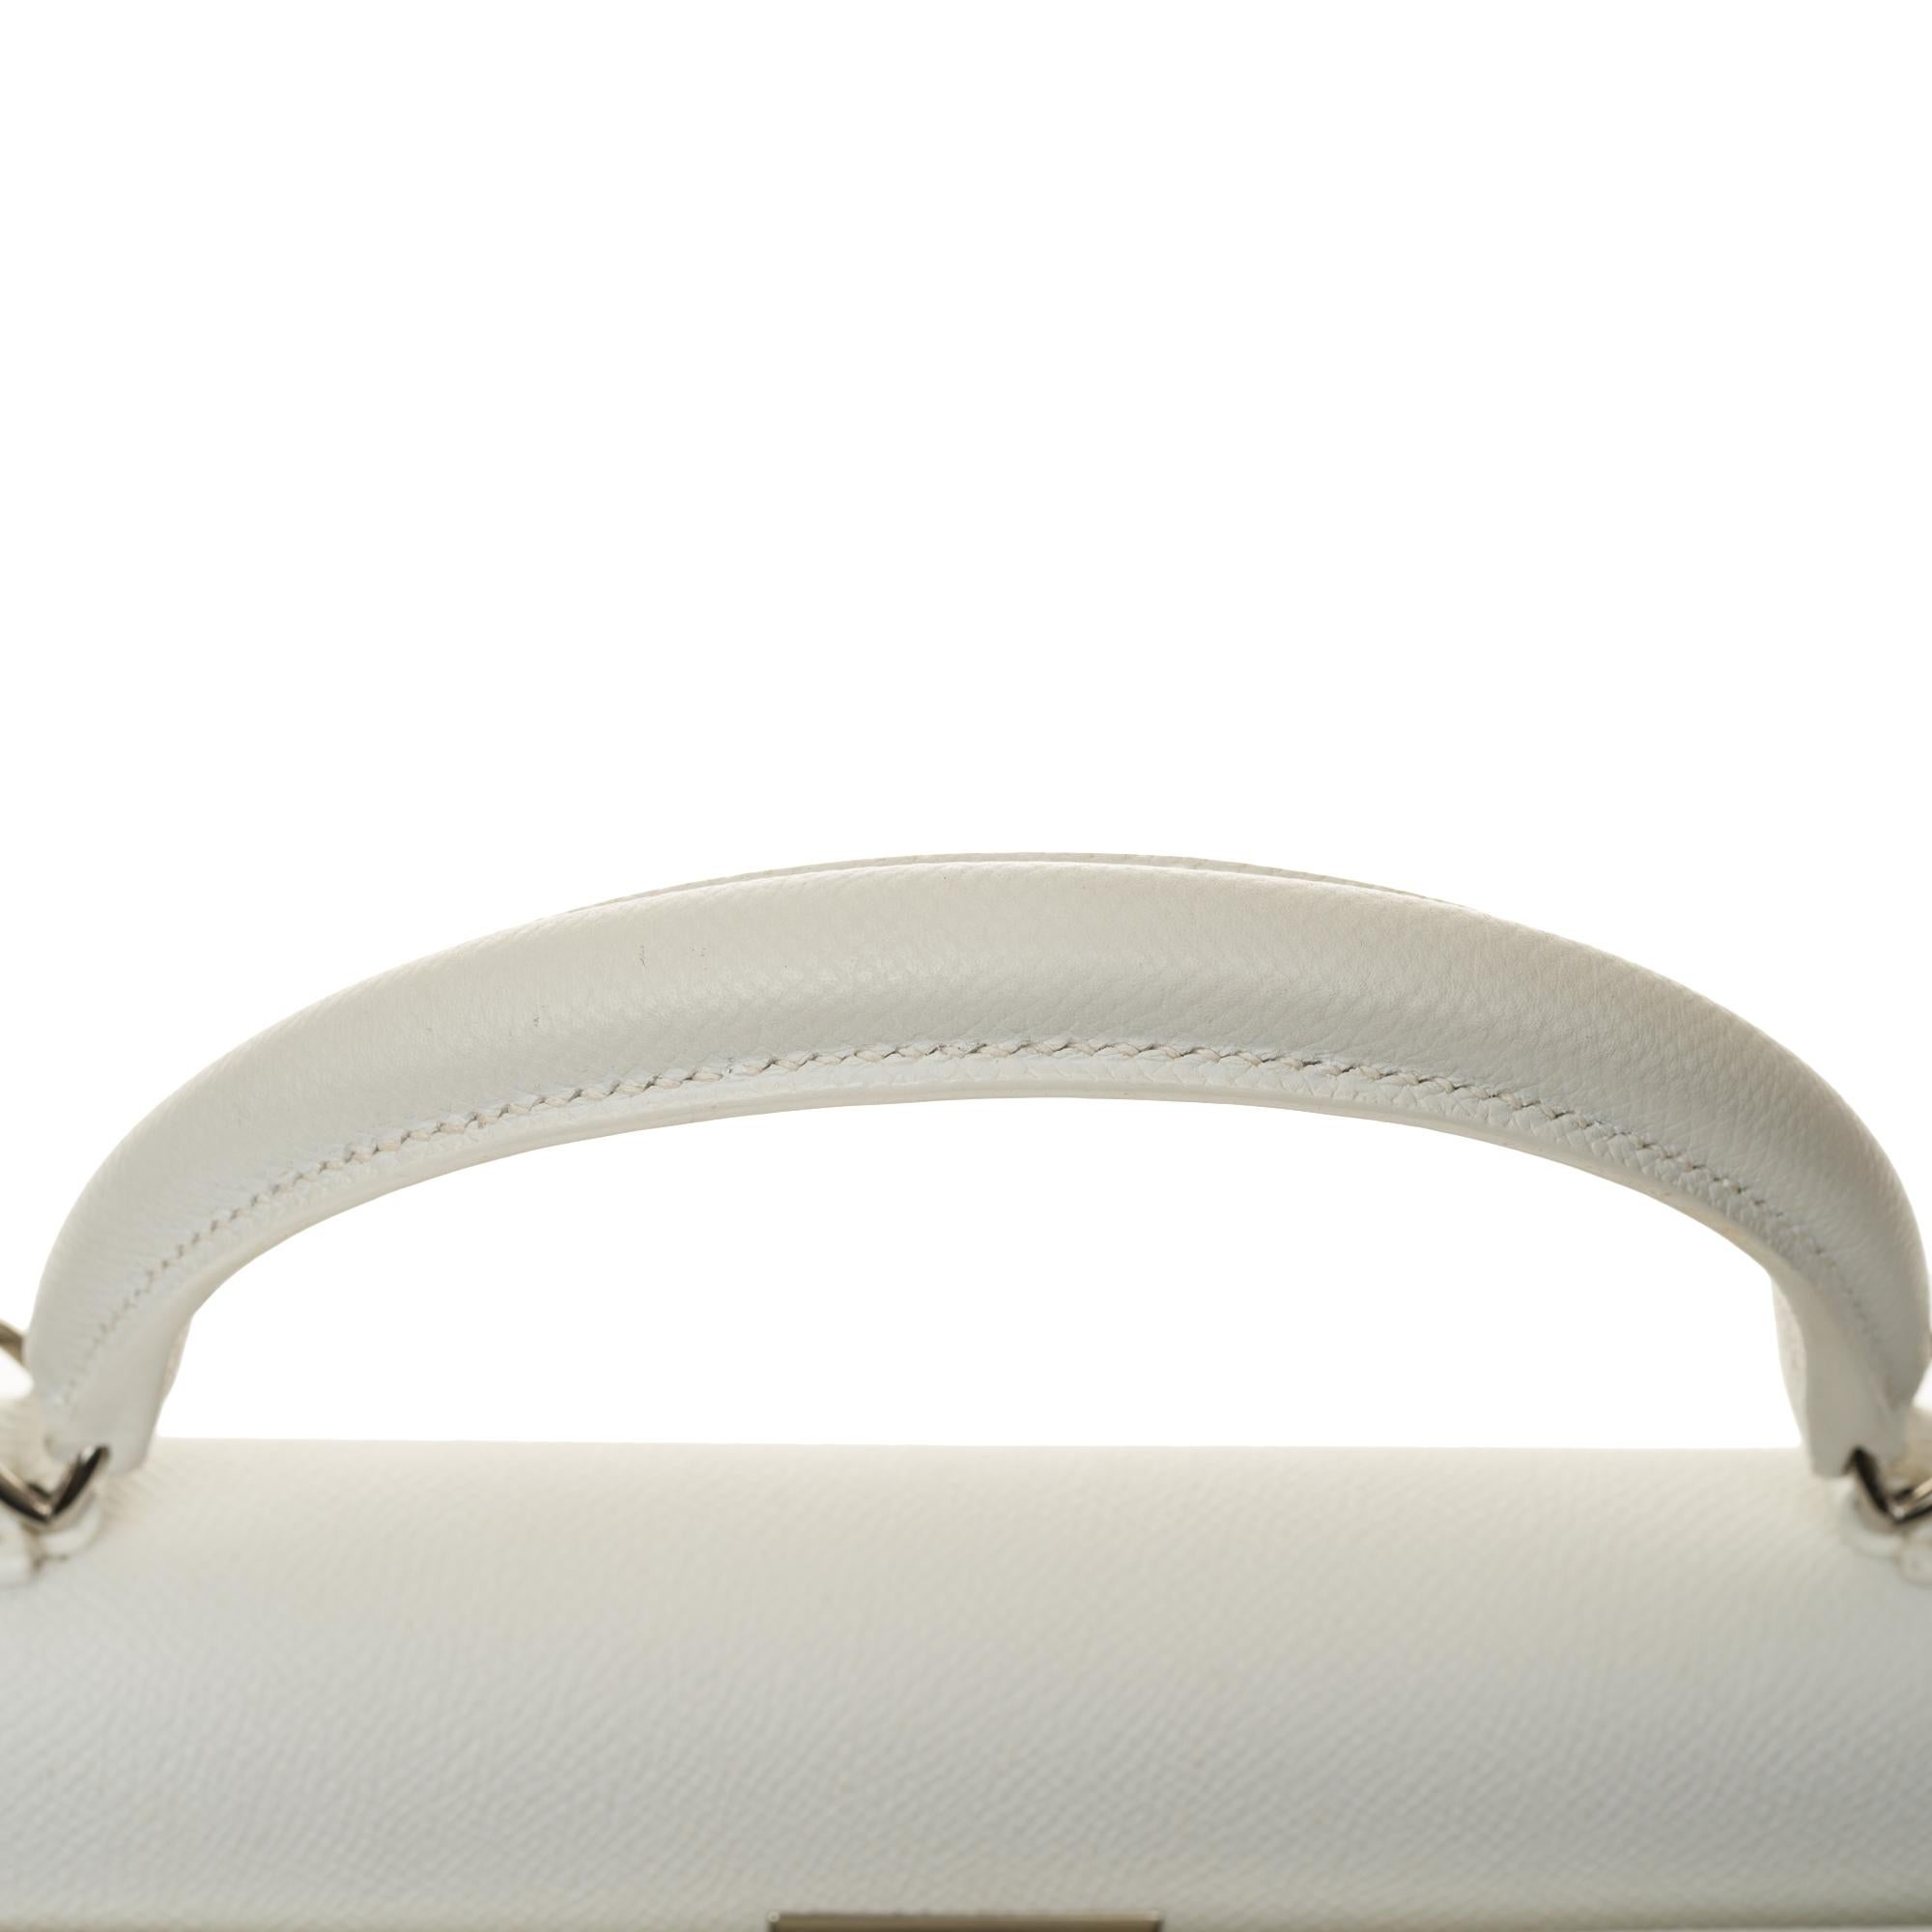 Hermès Kelly 32cm handbag with strap in white epsom leather, Palladium hardware 3